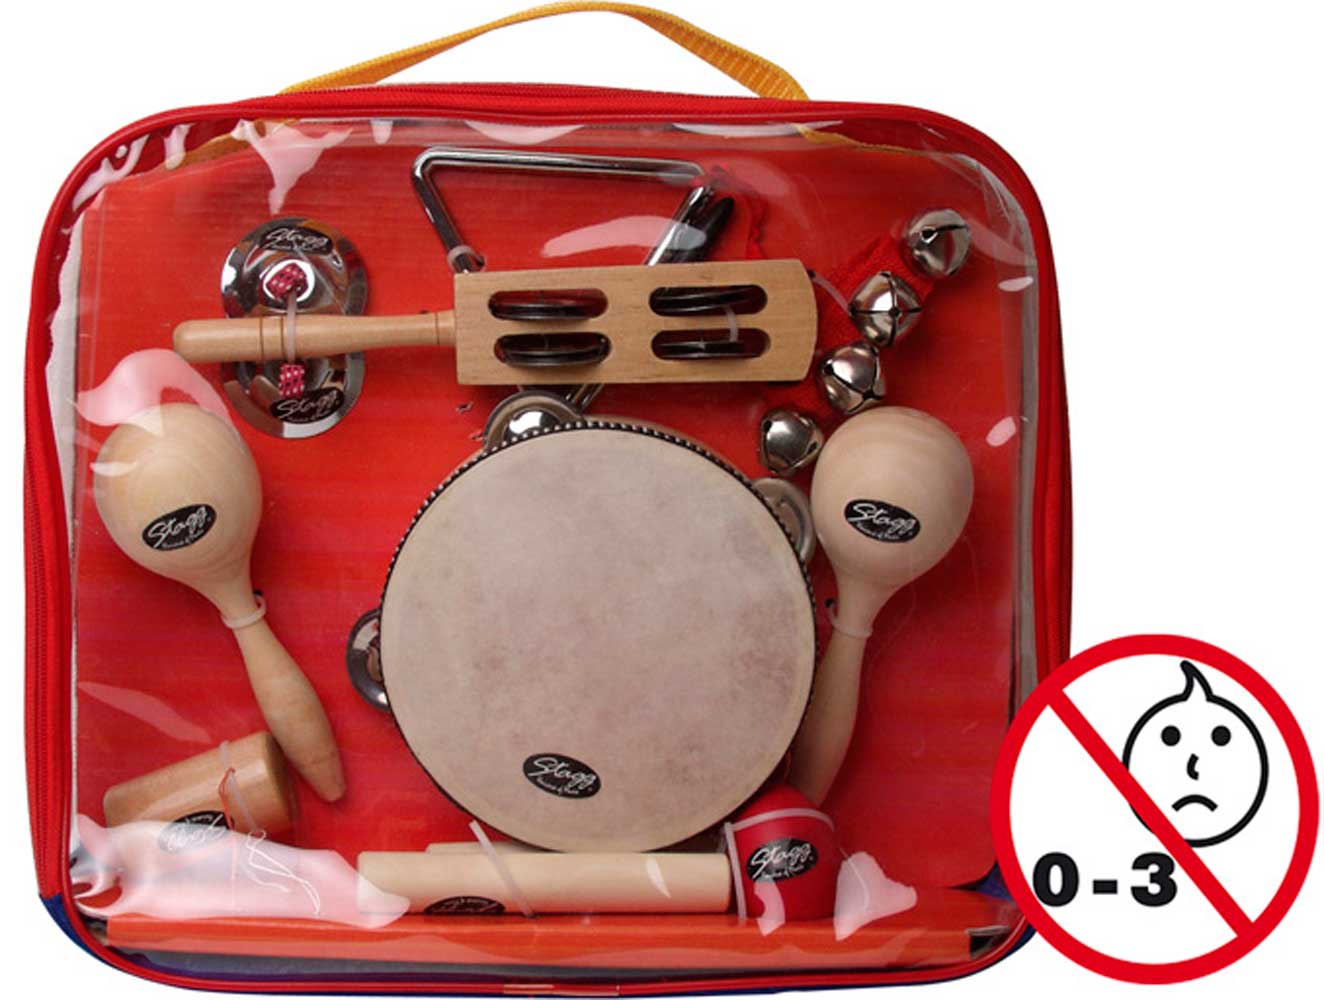 Stagg Kit Percussion Enfants Cpk-01 - - Percussie set voor kinderen - Variation 1